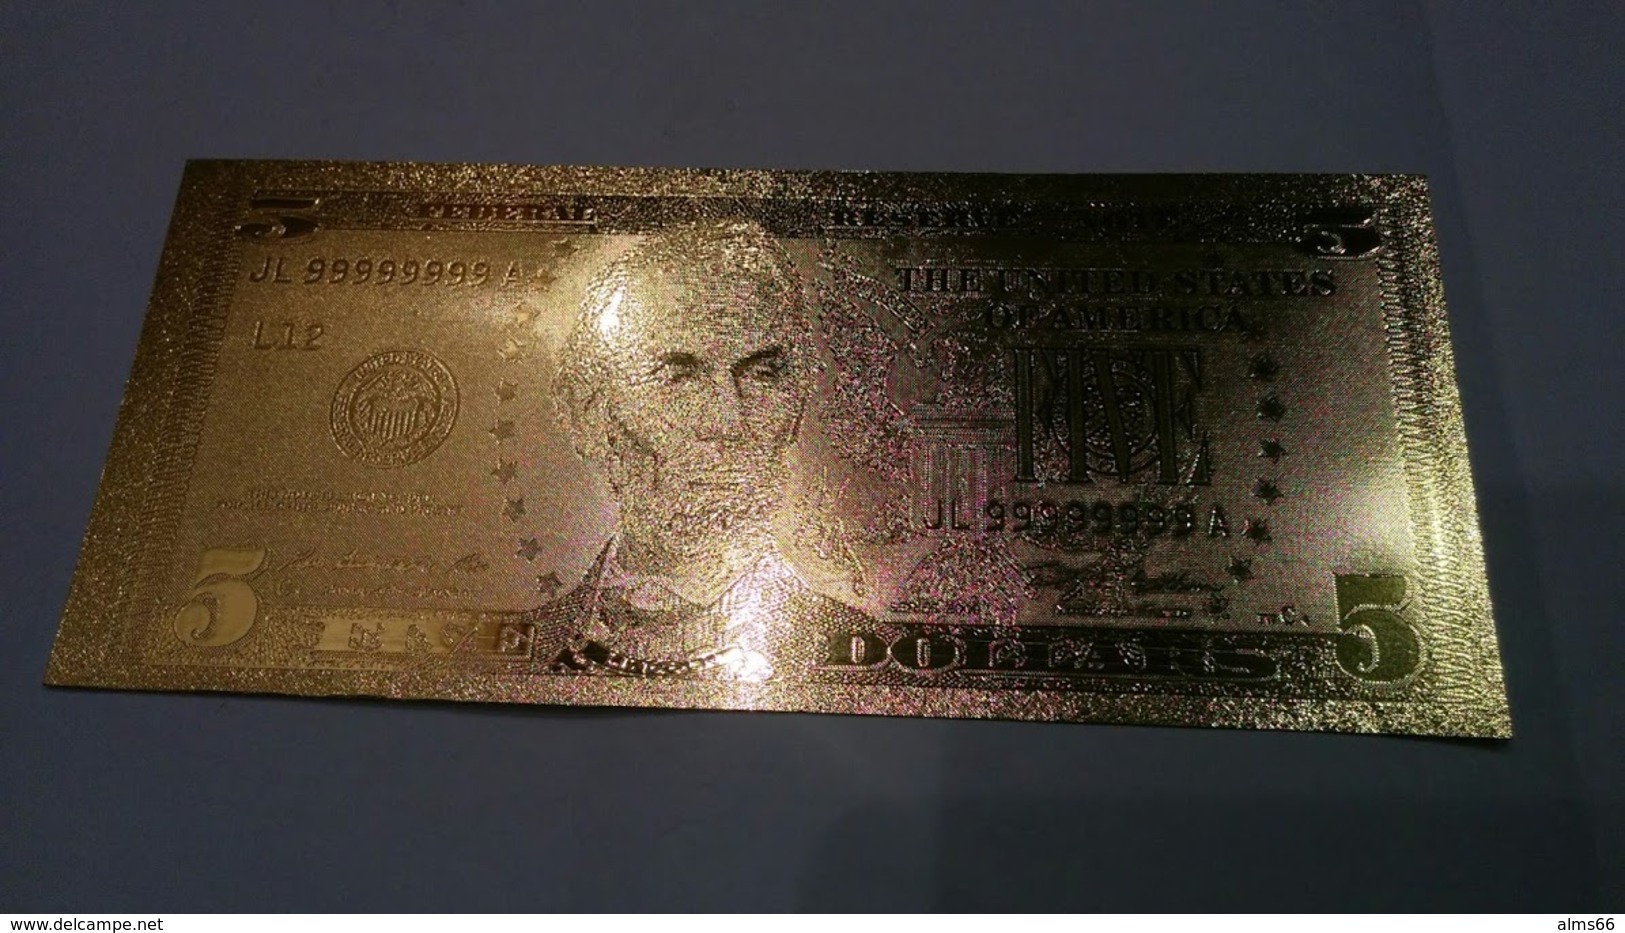 USA 5 Dollar 2009 UNC - Gold Plated - Very Nice But Not Real Money! - Biljetten Van De  Federal Reserve (1928-...)